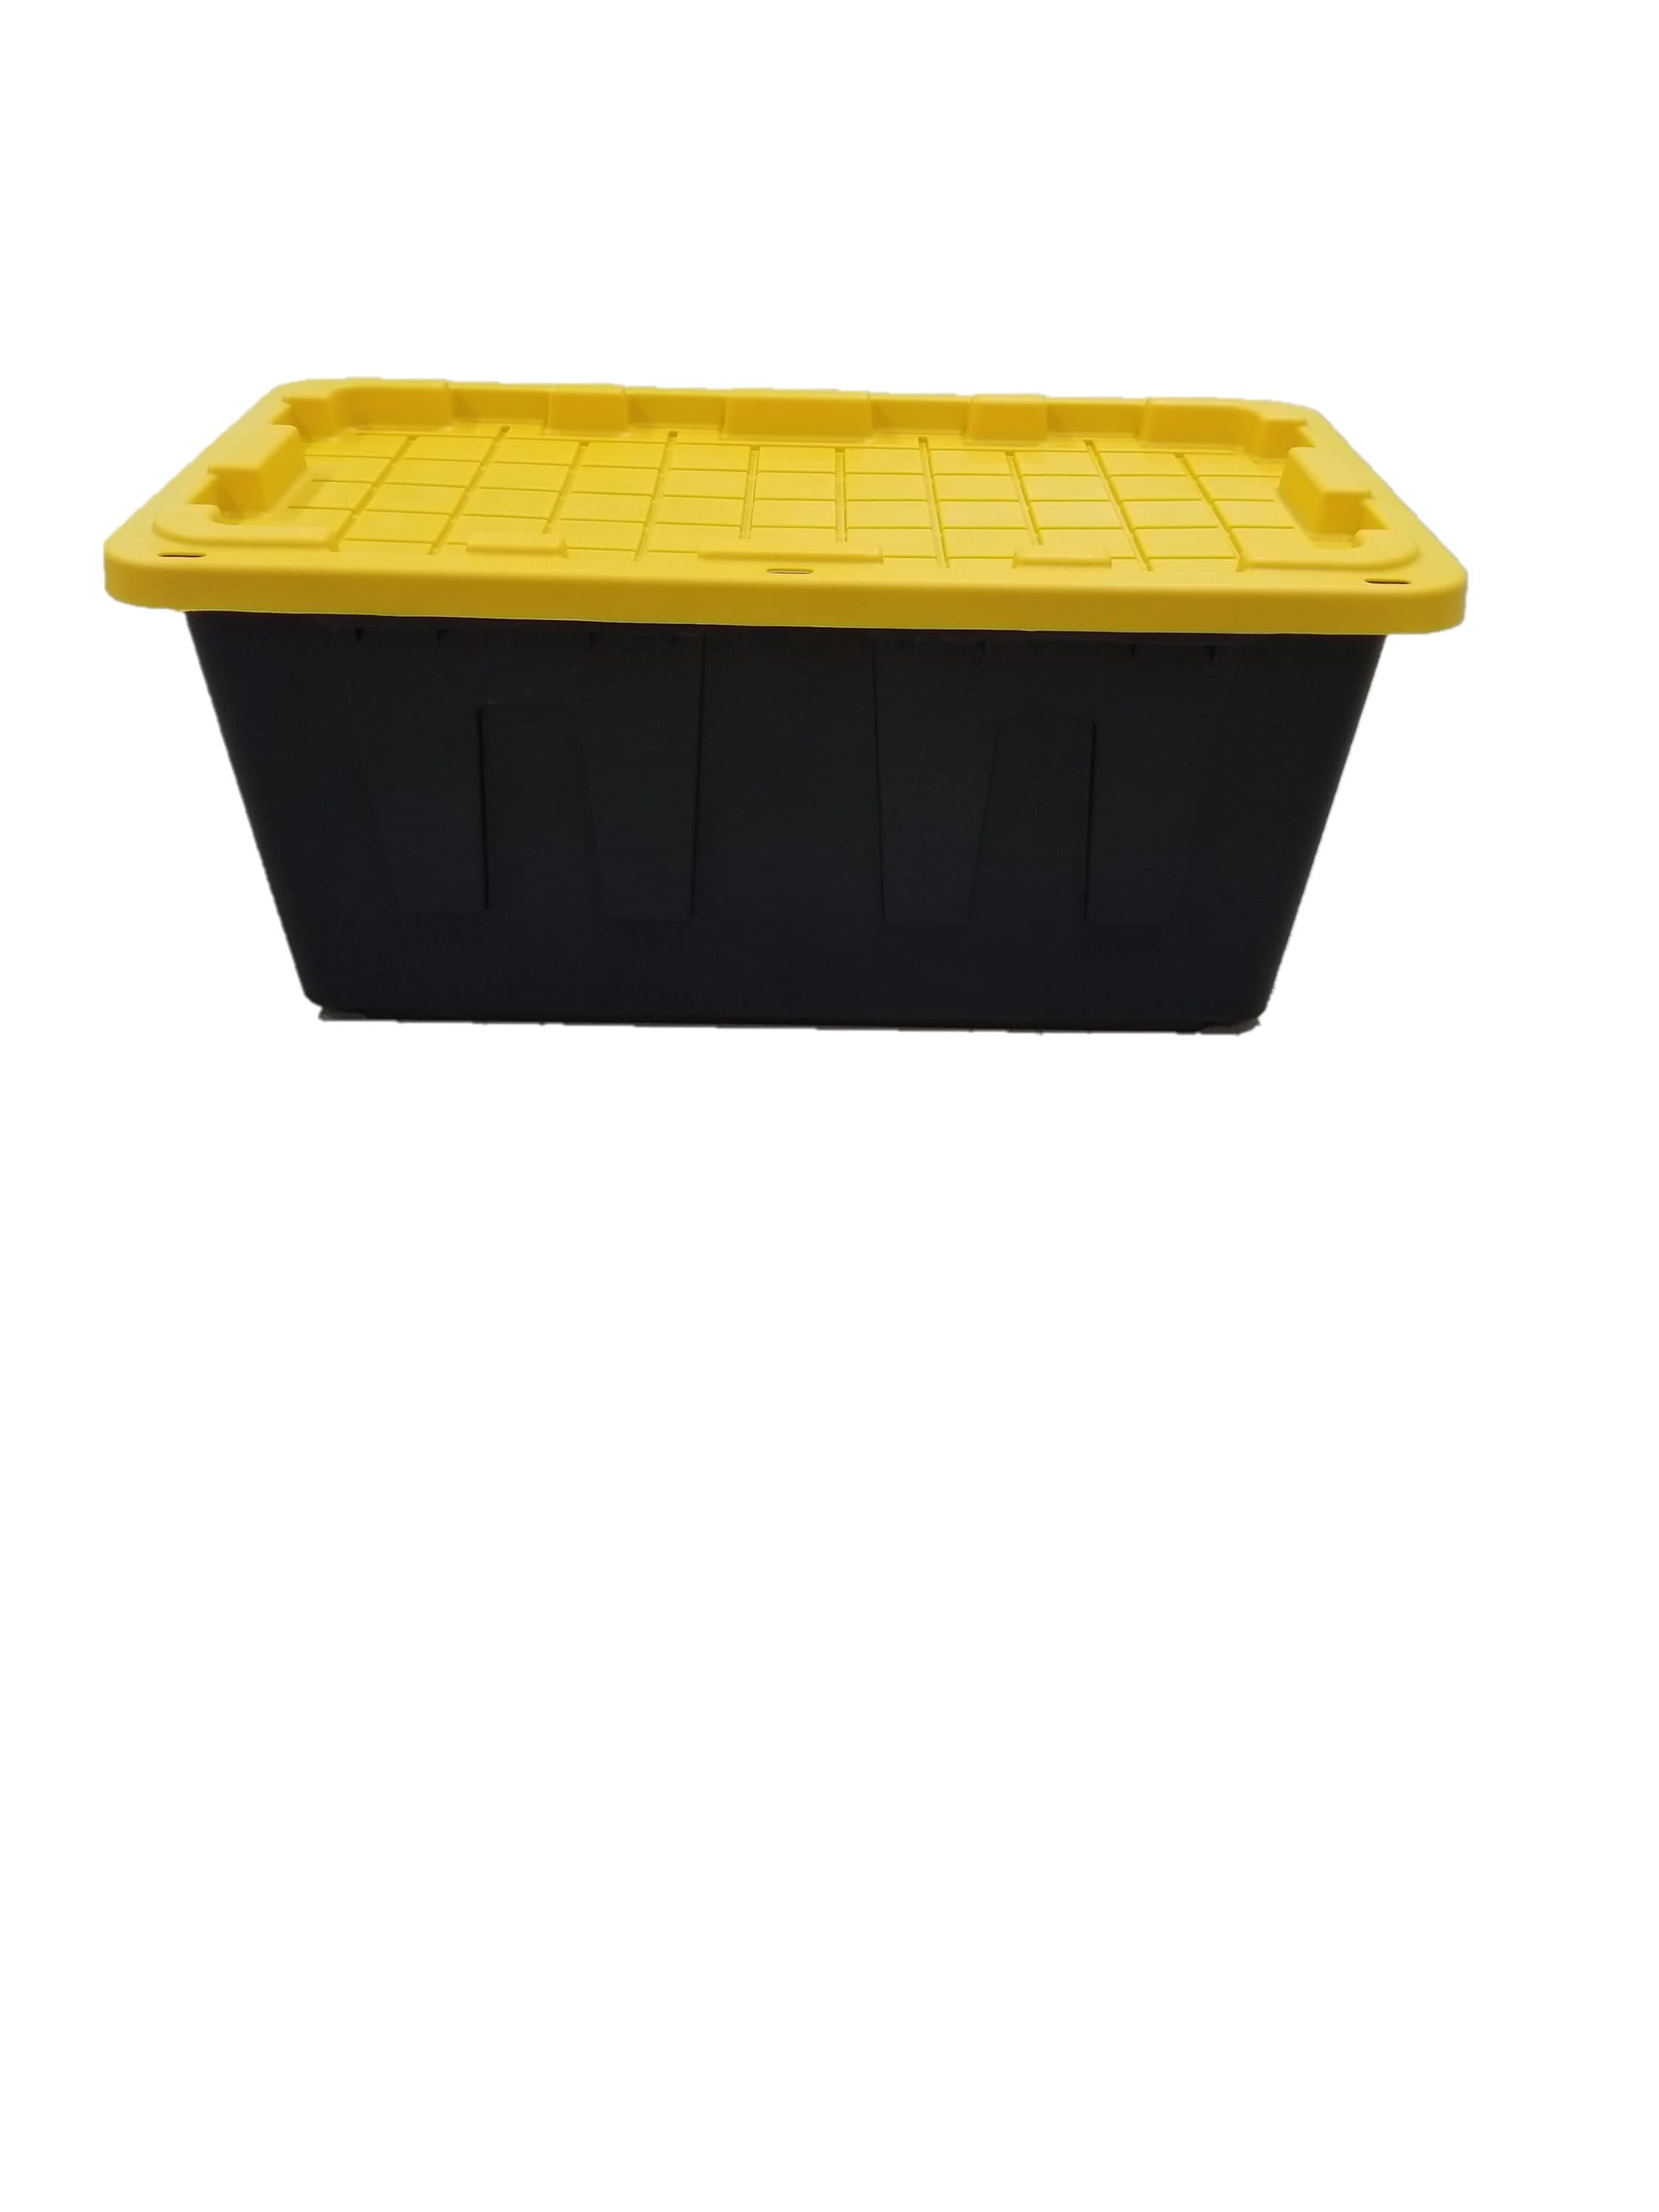 CREATIVE PLASTIC CONCEPTS 27 Gallon Black & Yellow Tough Box with Lid